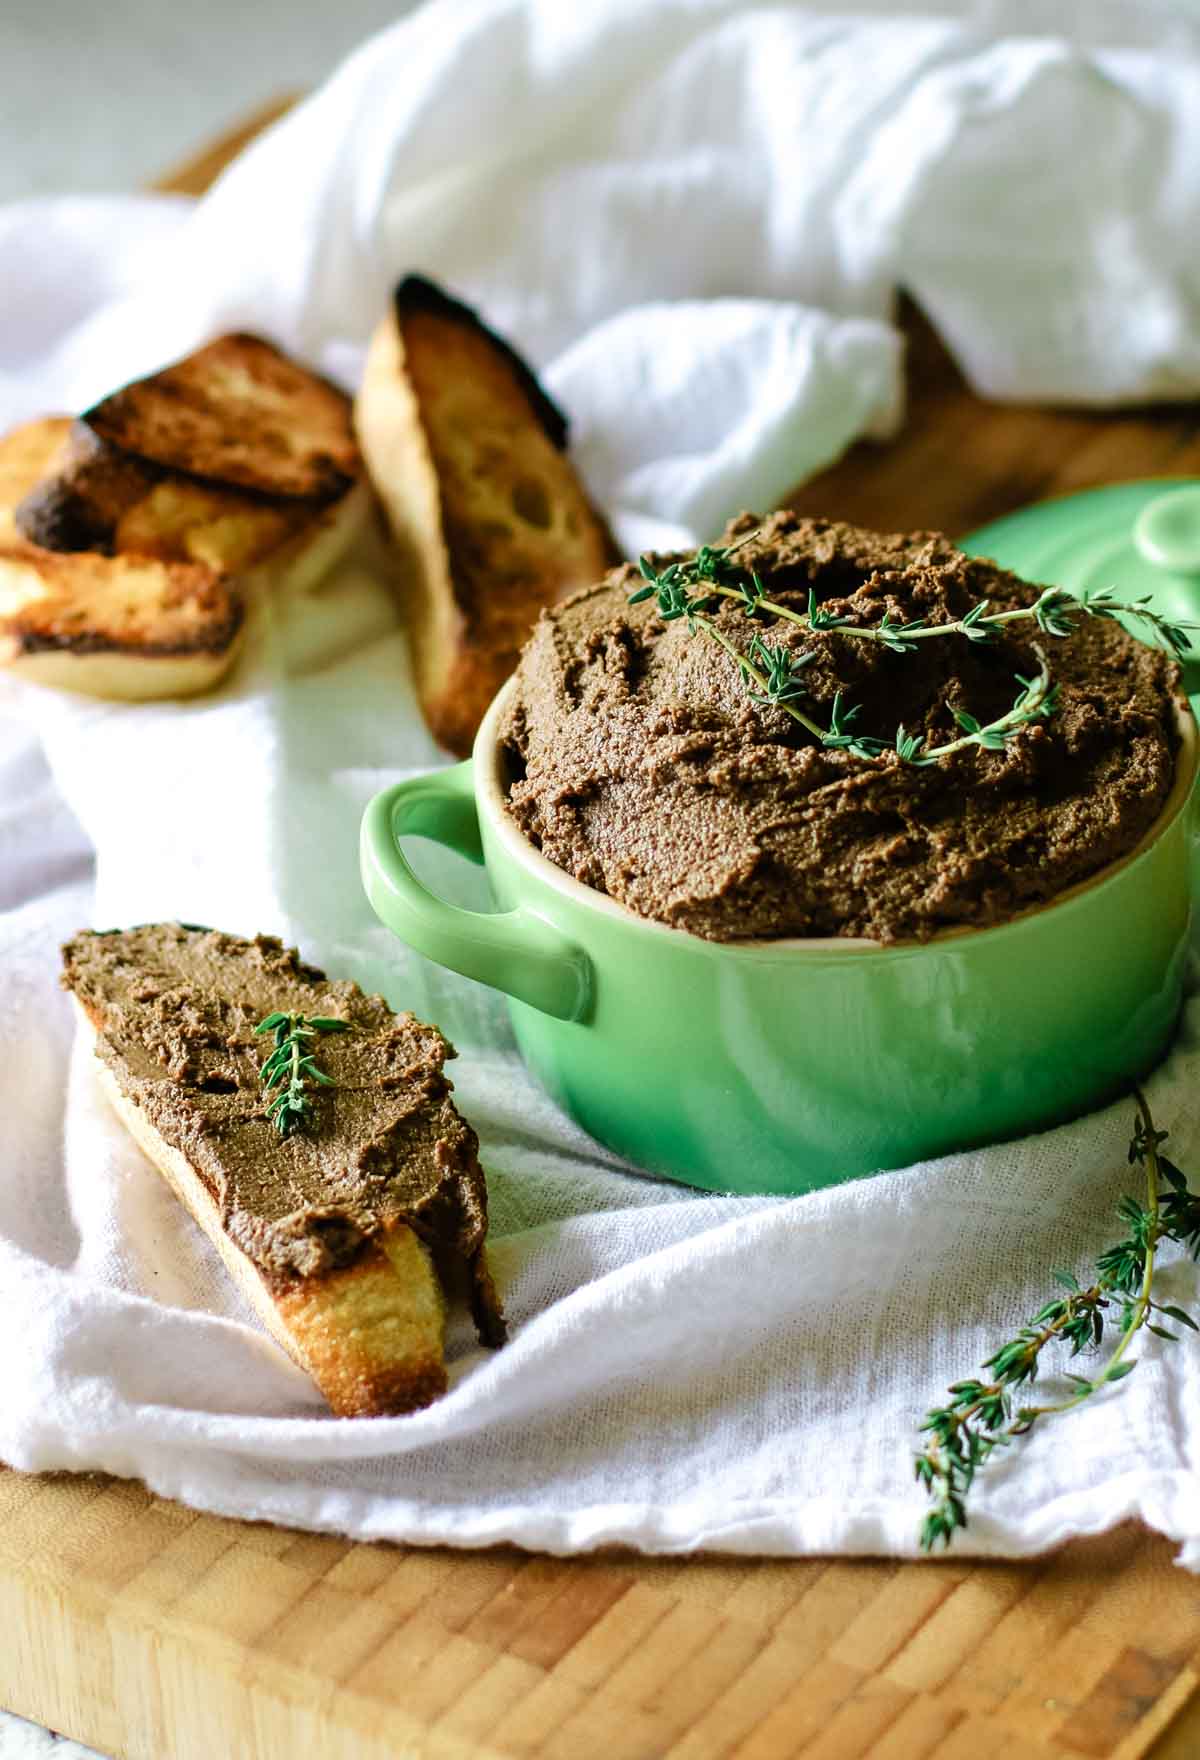 beef liver pate in a ramekin with sourdough bread